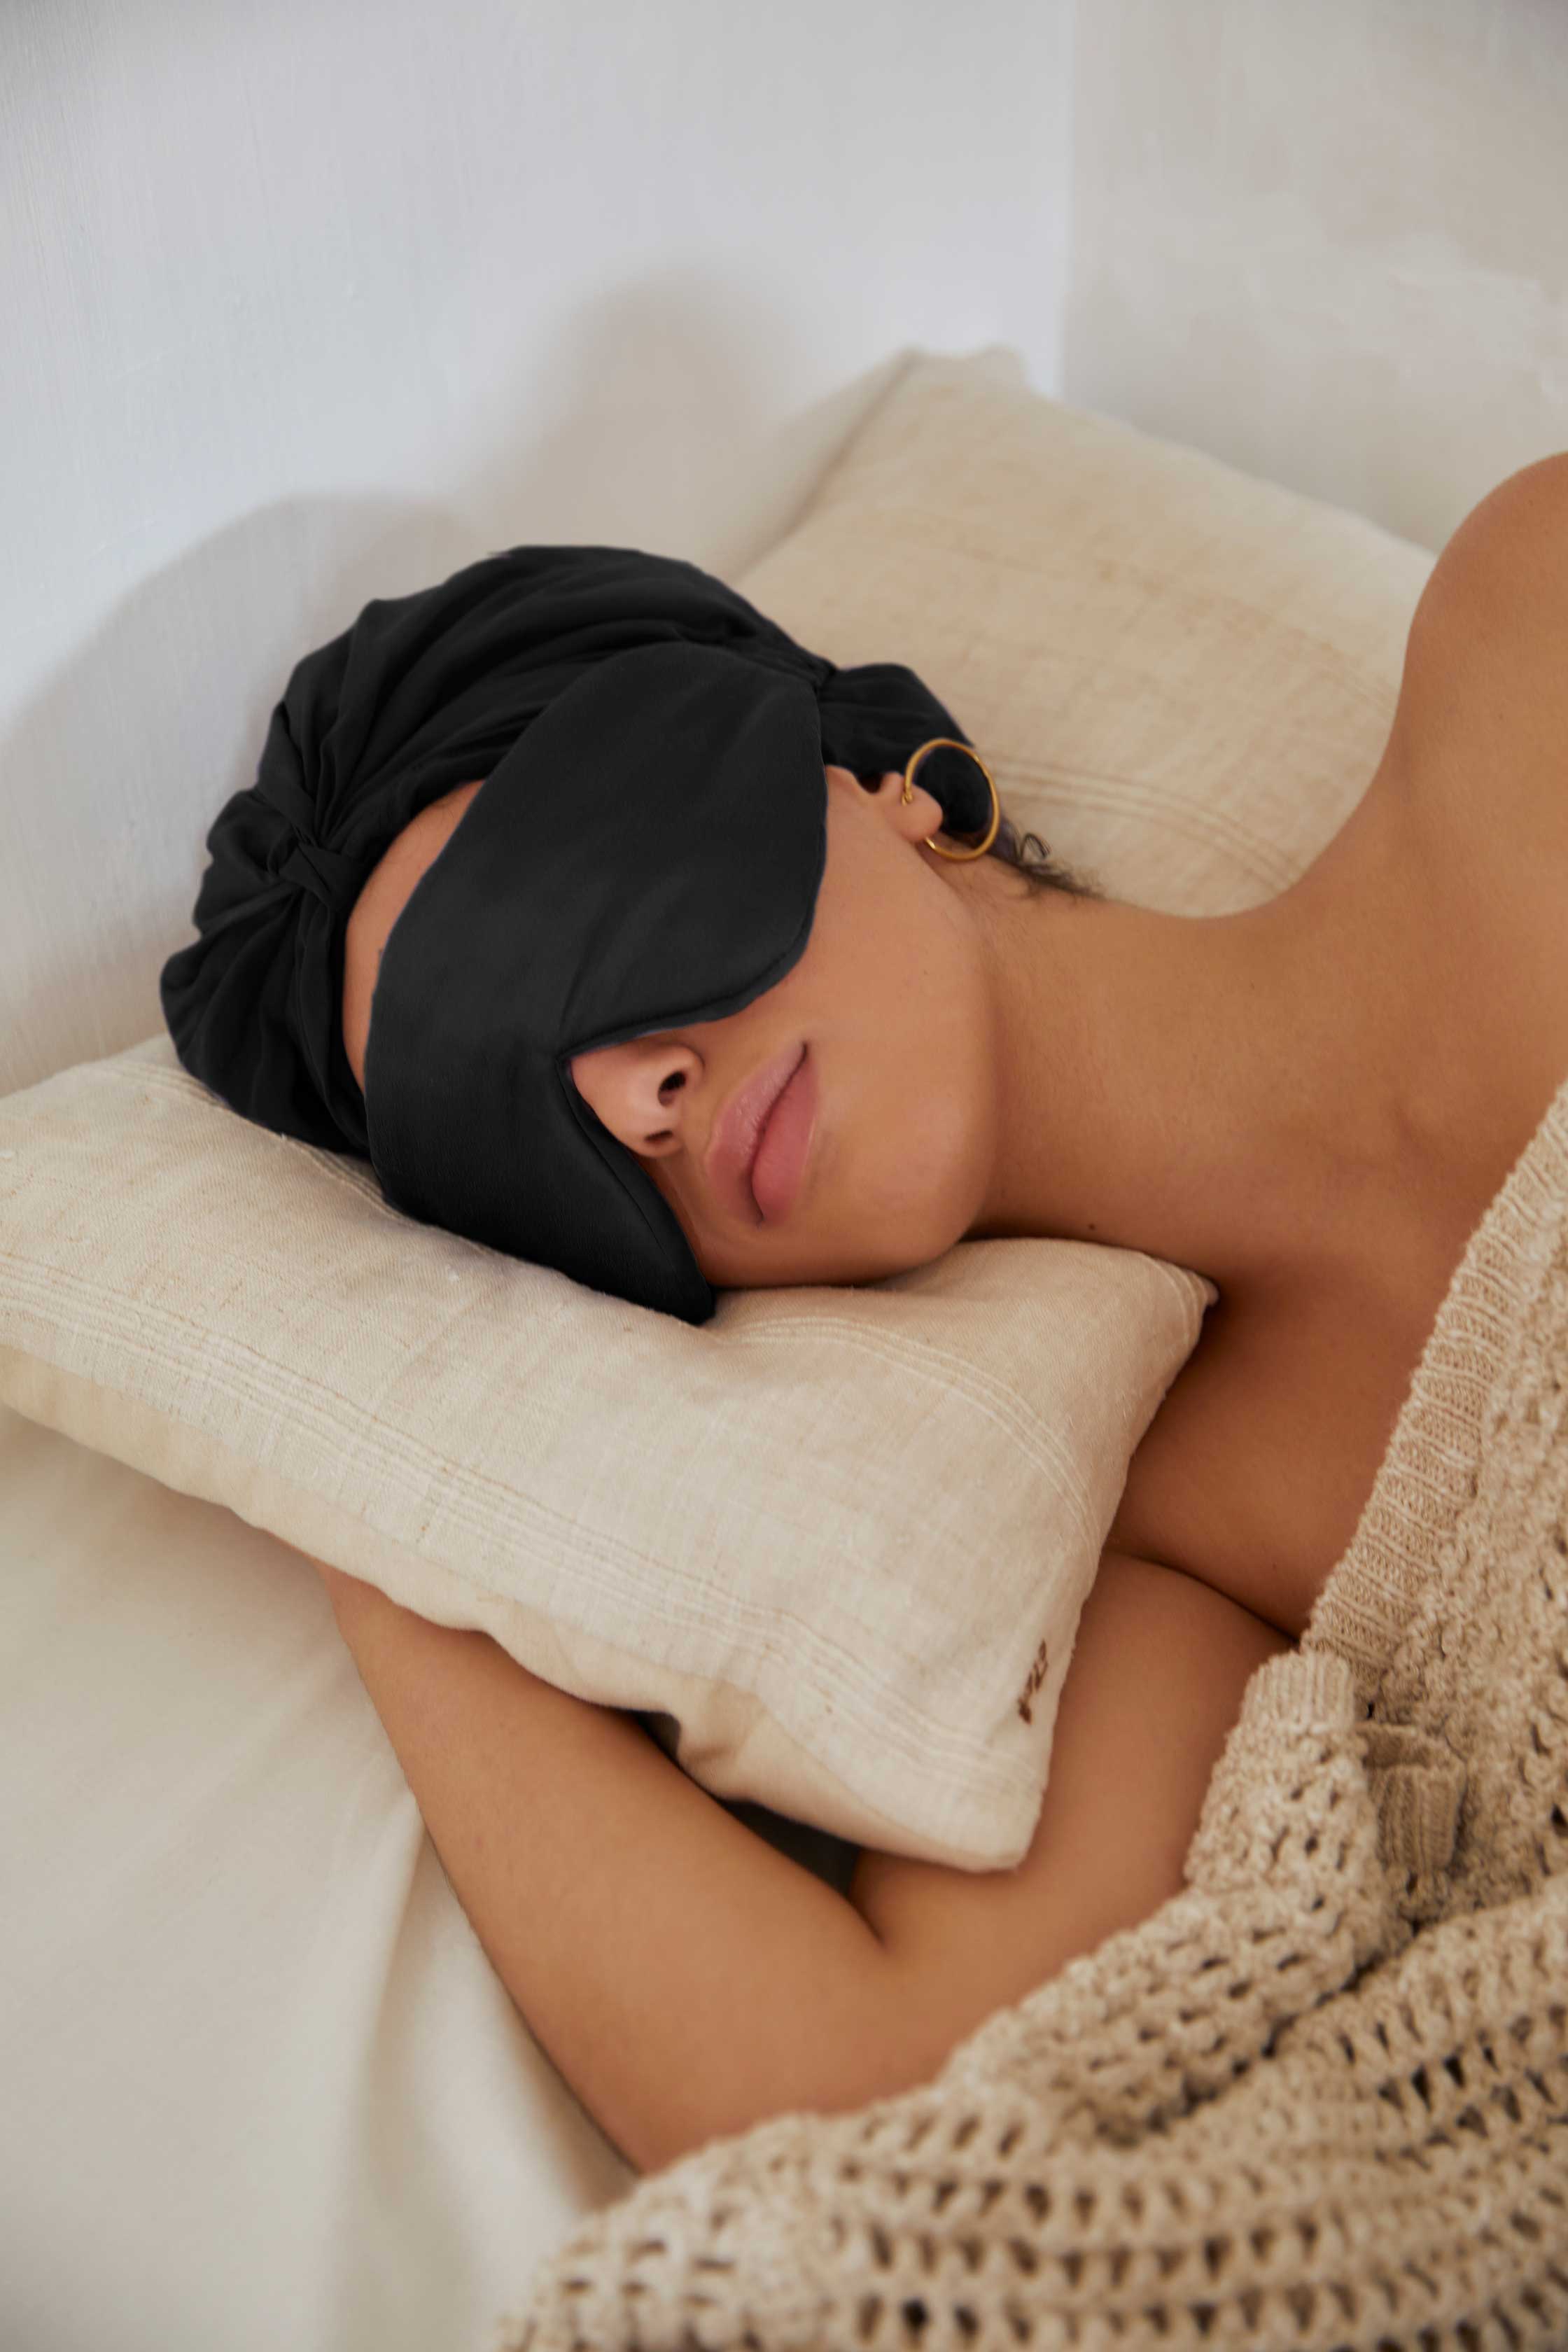 100% Silk Plush Padded Eye Mask For Blocking Light, Travel